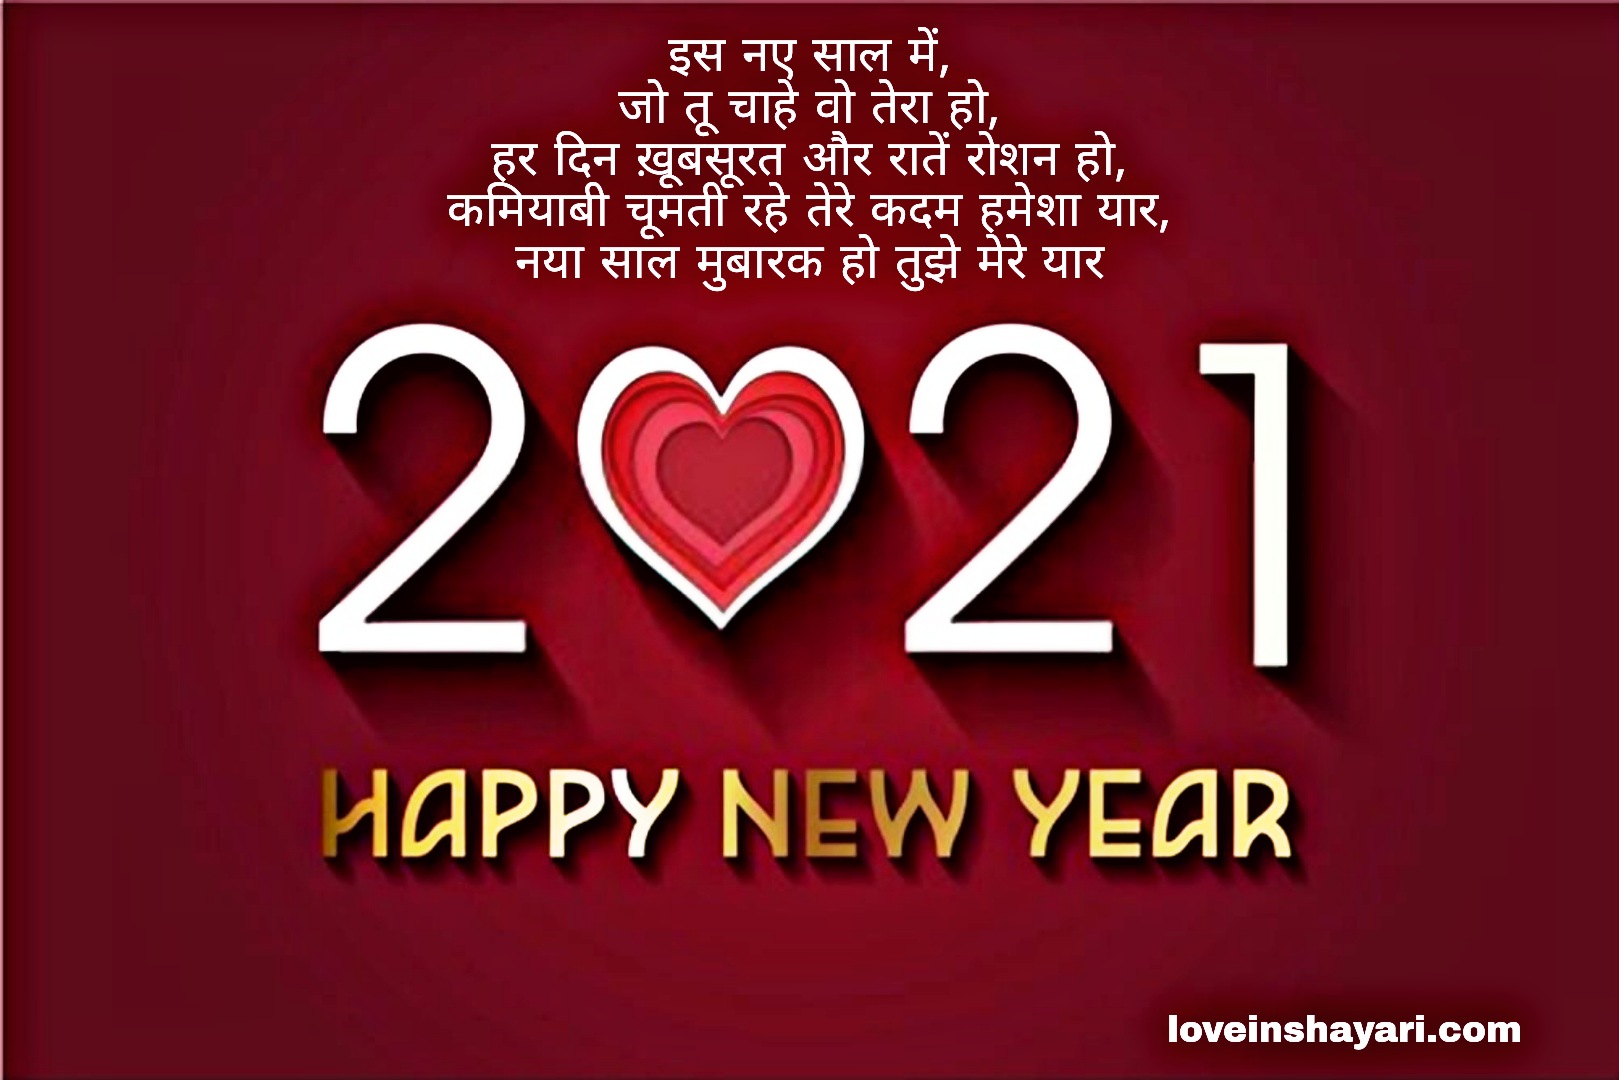 Happy New Year 2020 Shayari With image » Love In Shayari